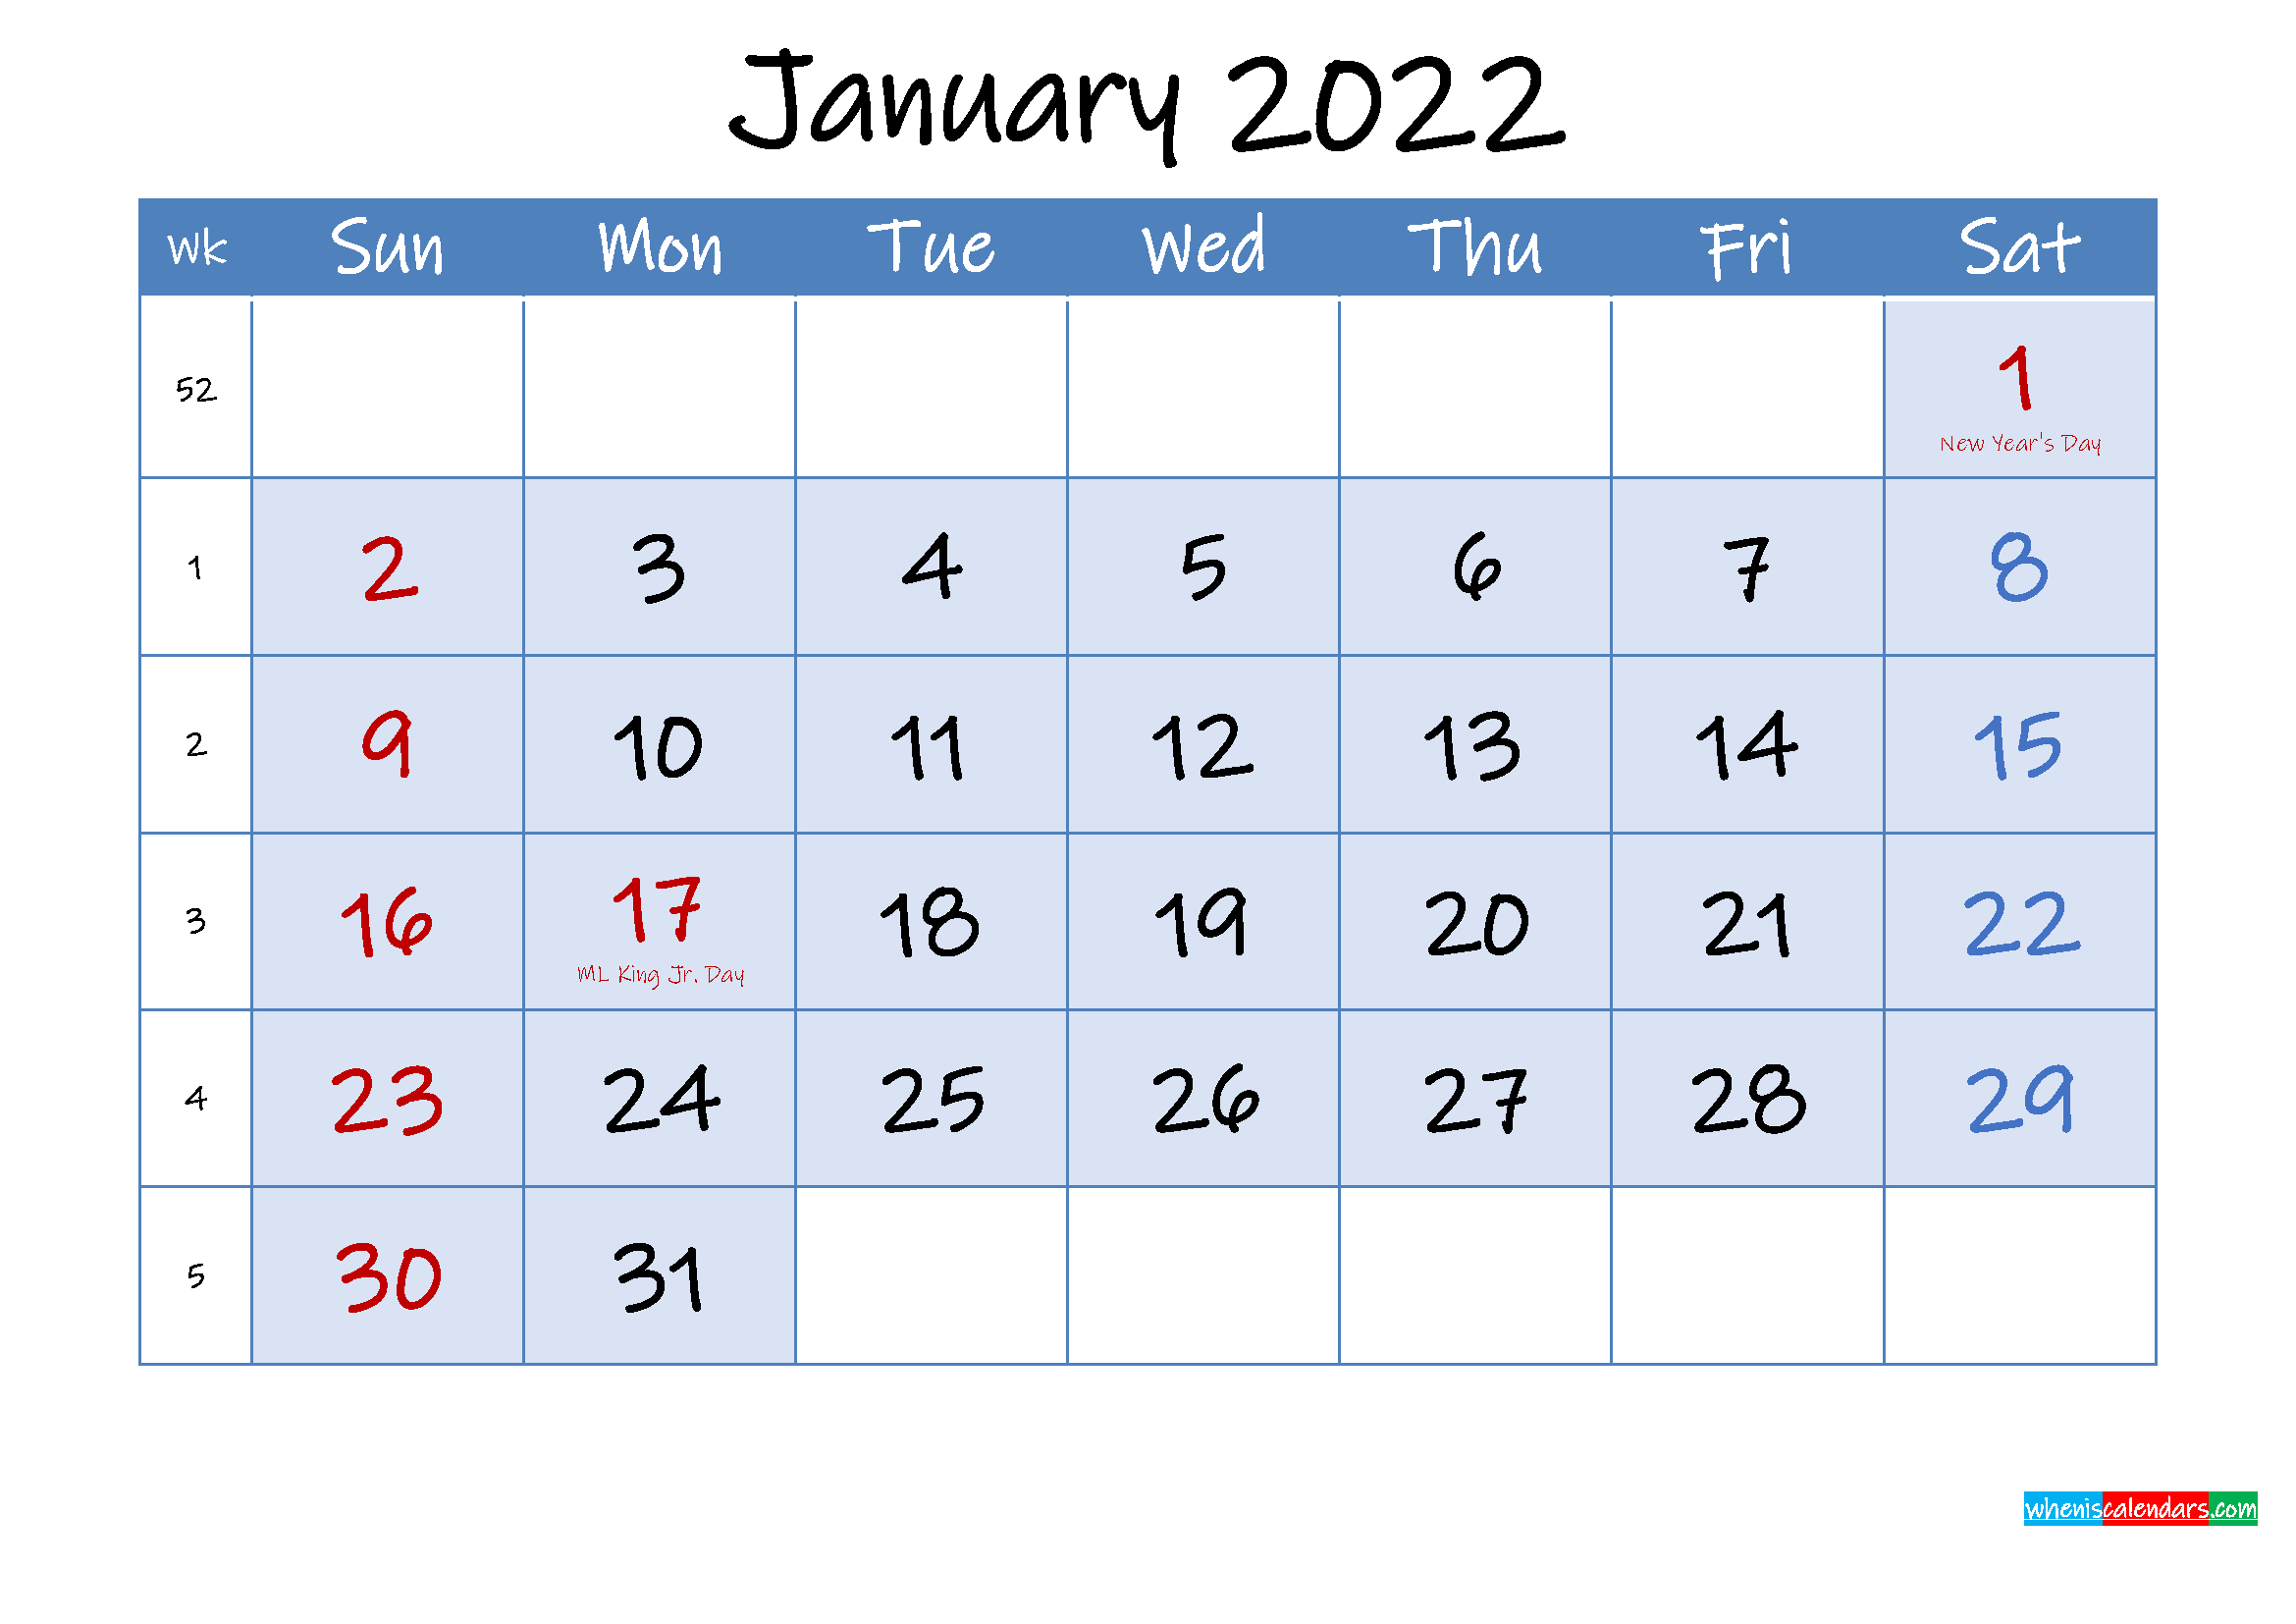 Free Printable January 2022 Calendar - Template Ink22M97 Calendar December 2021 And January 2022